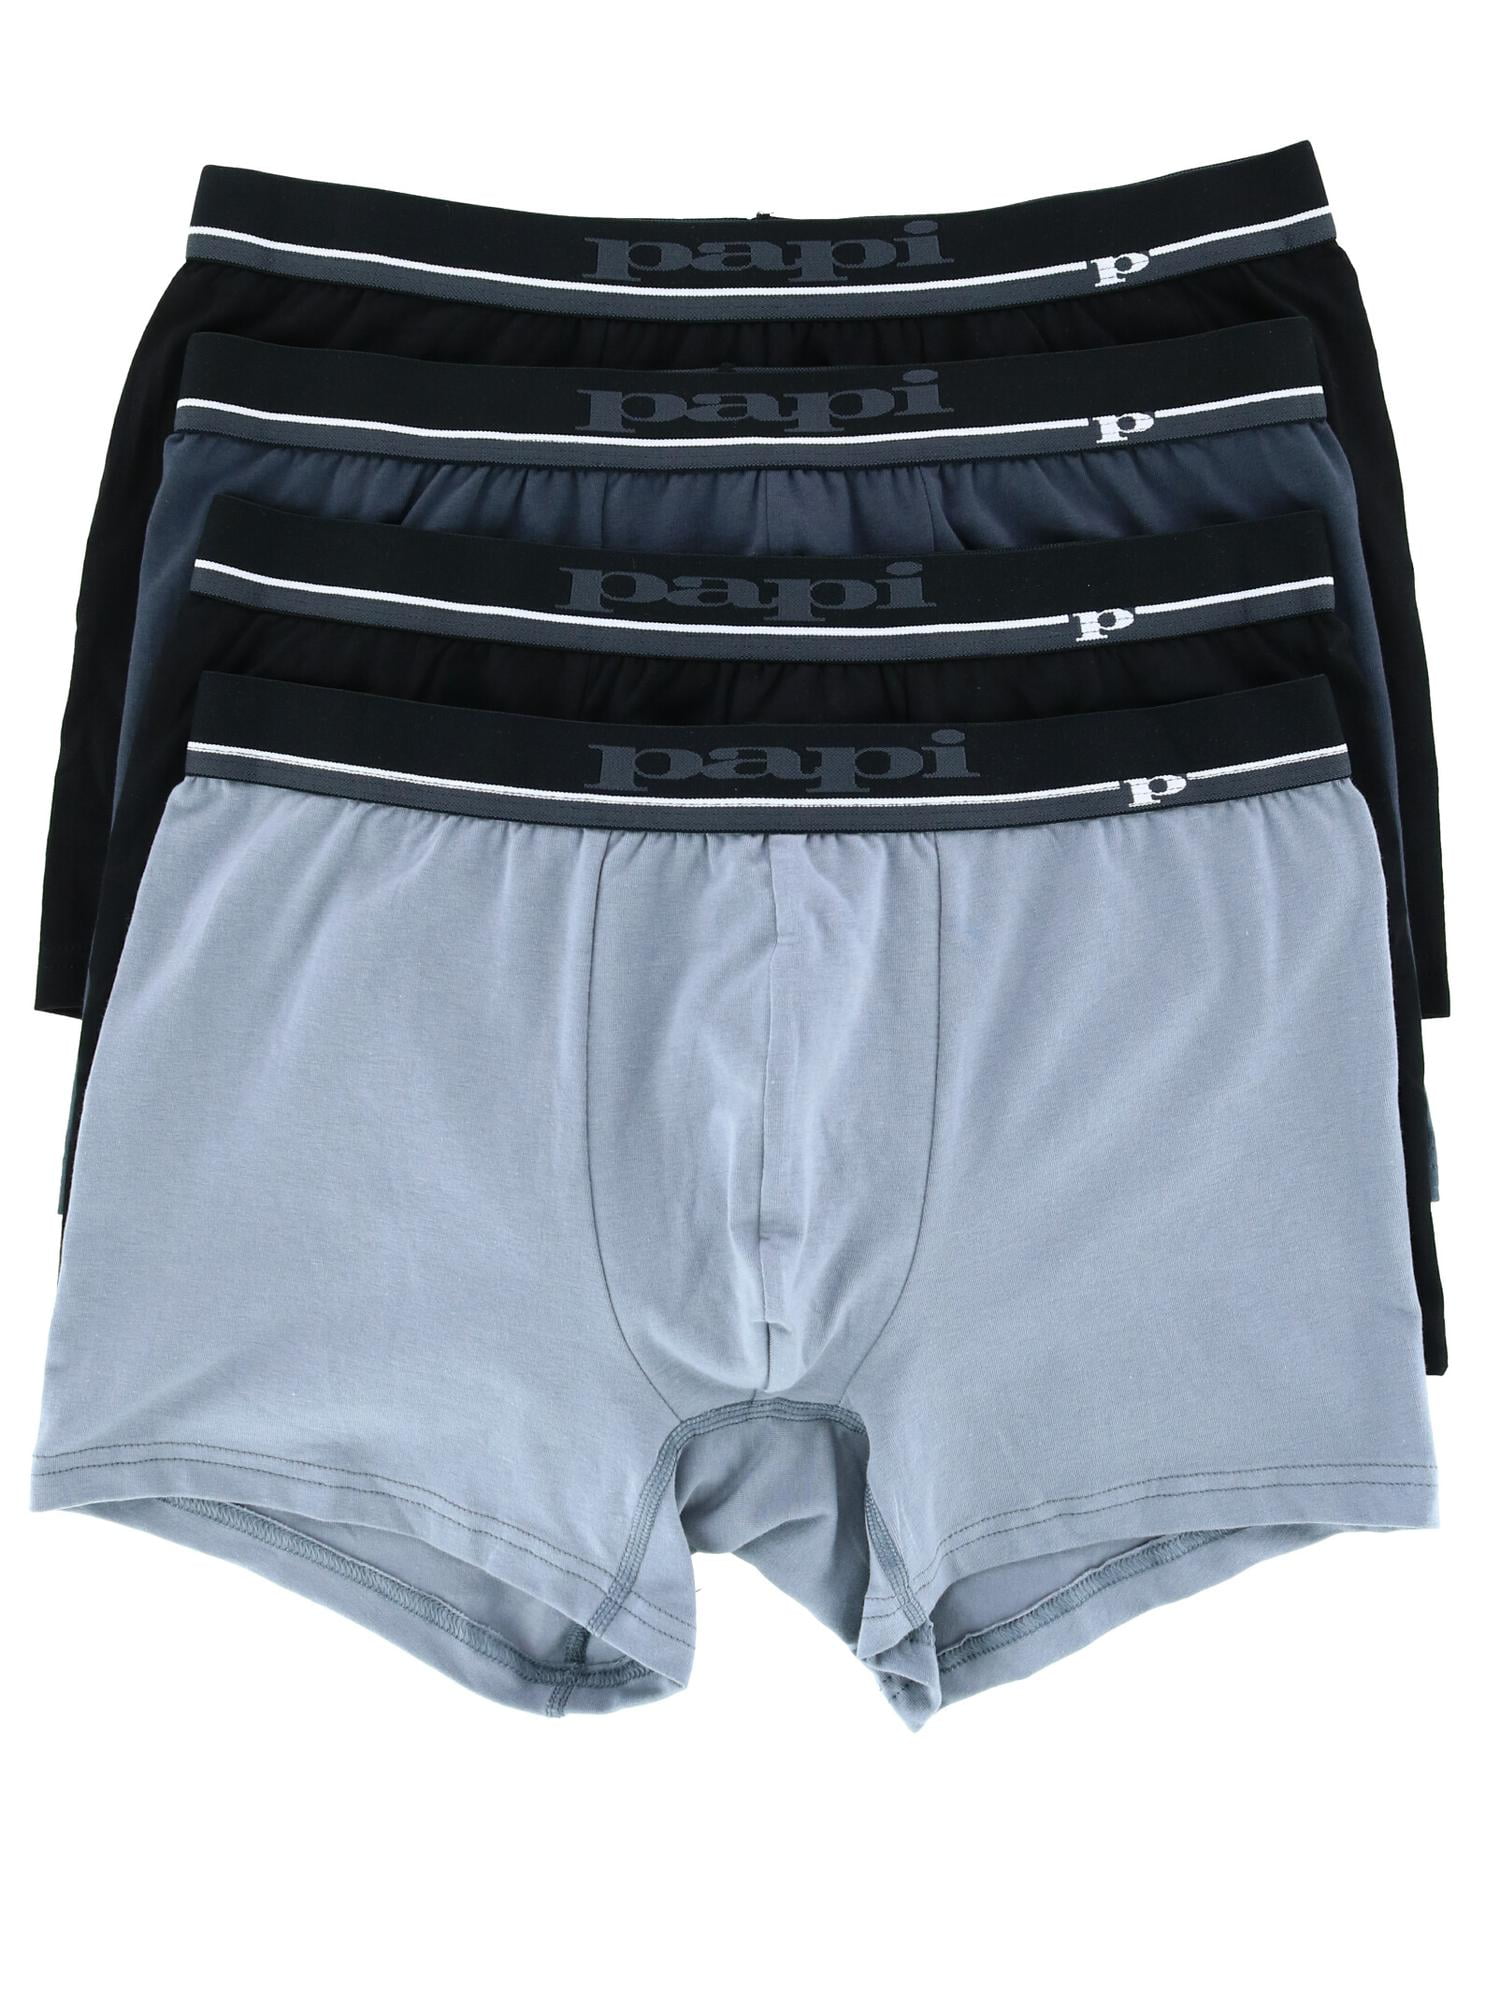 Papi Solid Comfort Underwear Trunks (Pack of 4) (Men's)